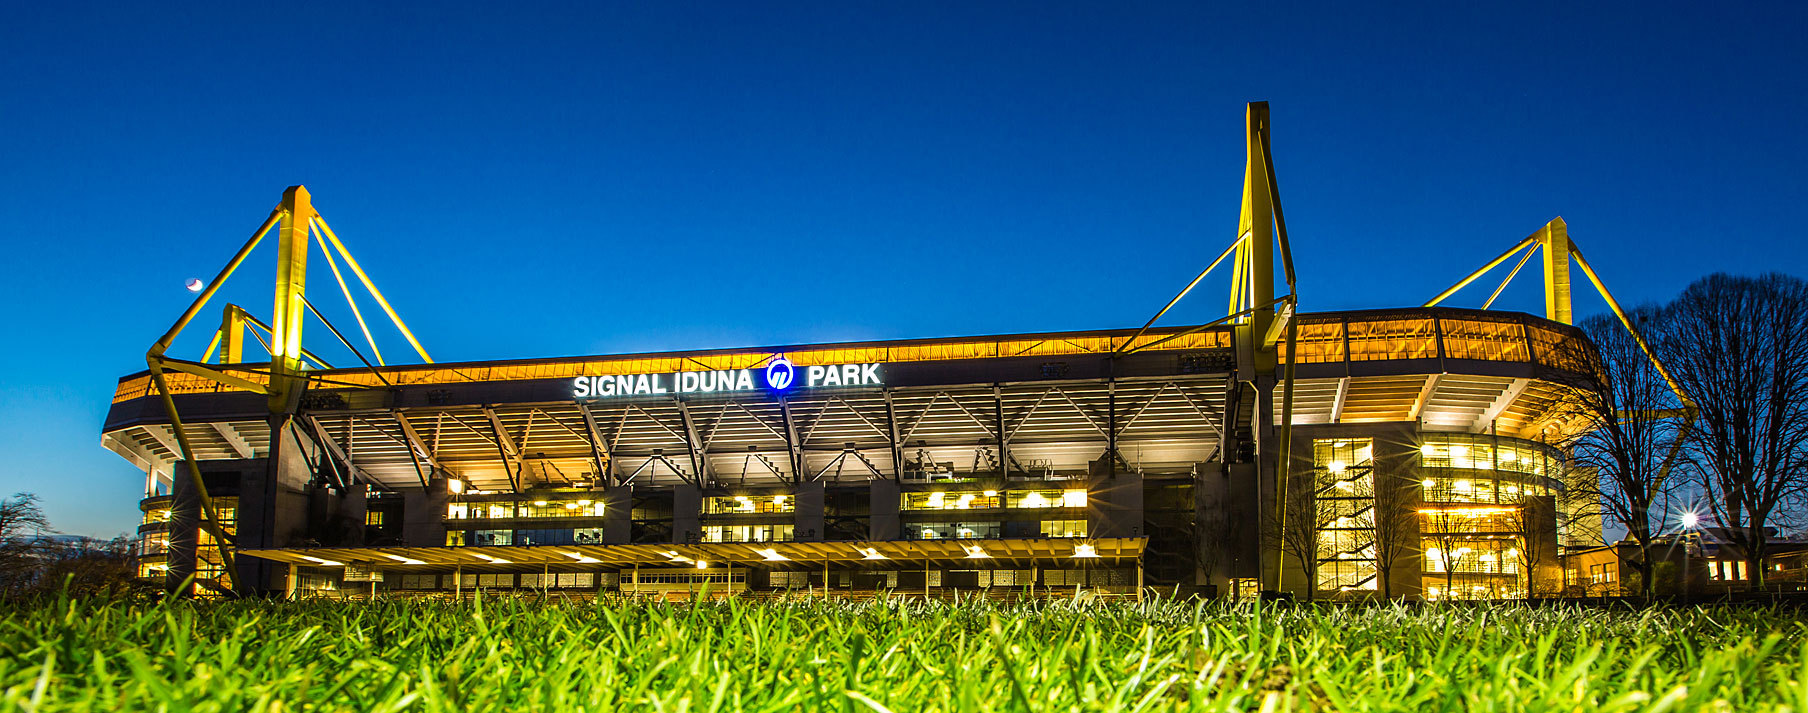 BVB-Stadion wird Corona Zentrum - Blaulicht-Report